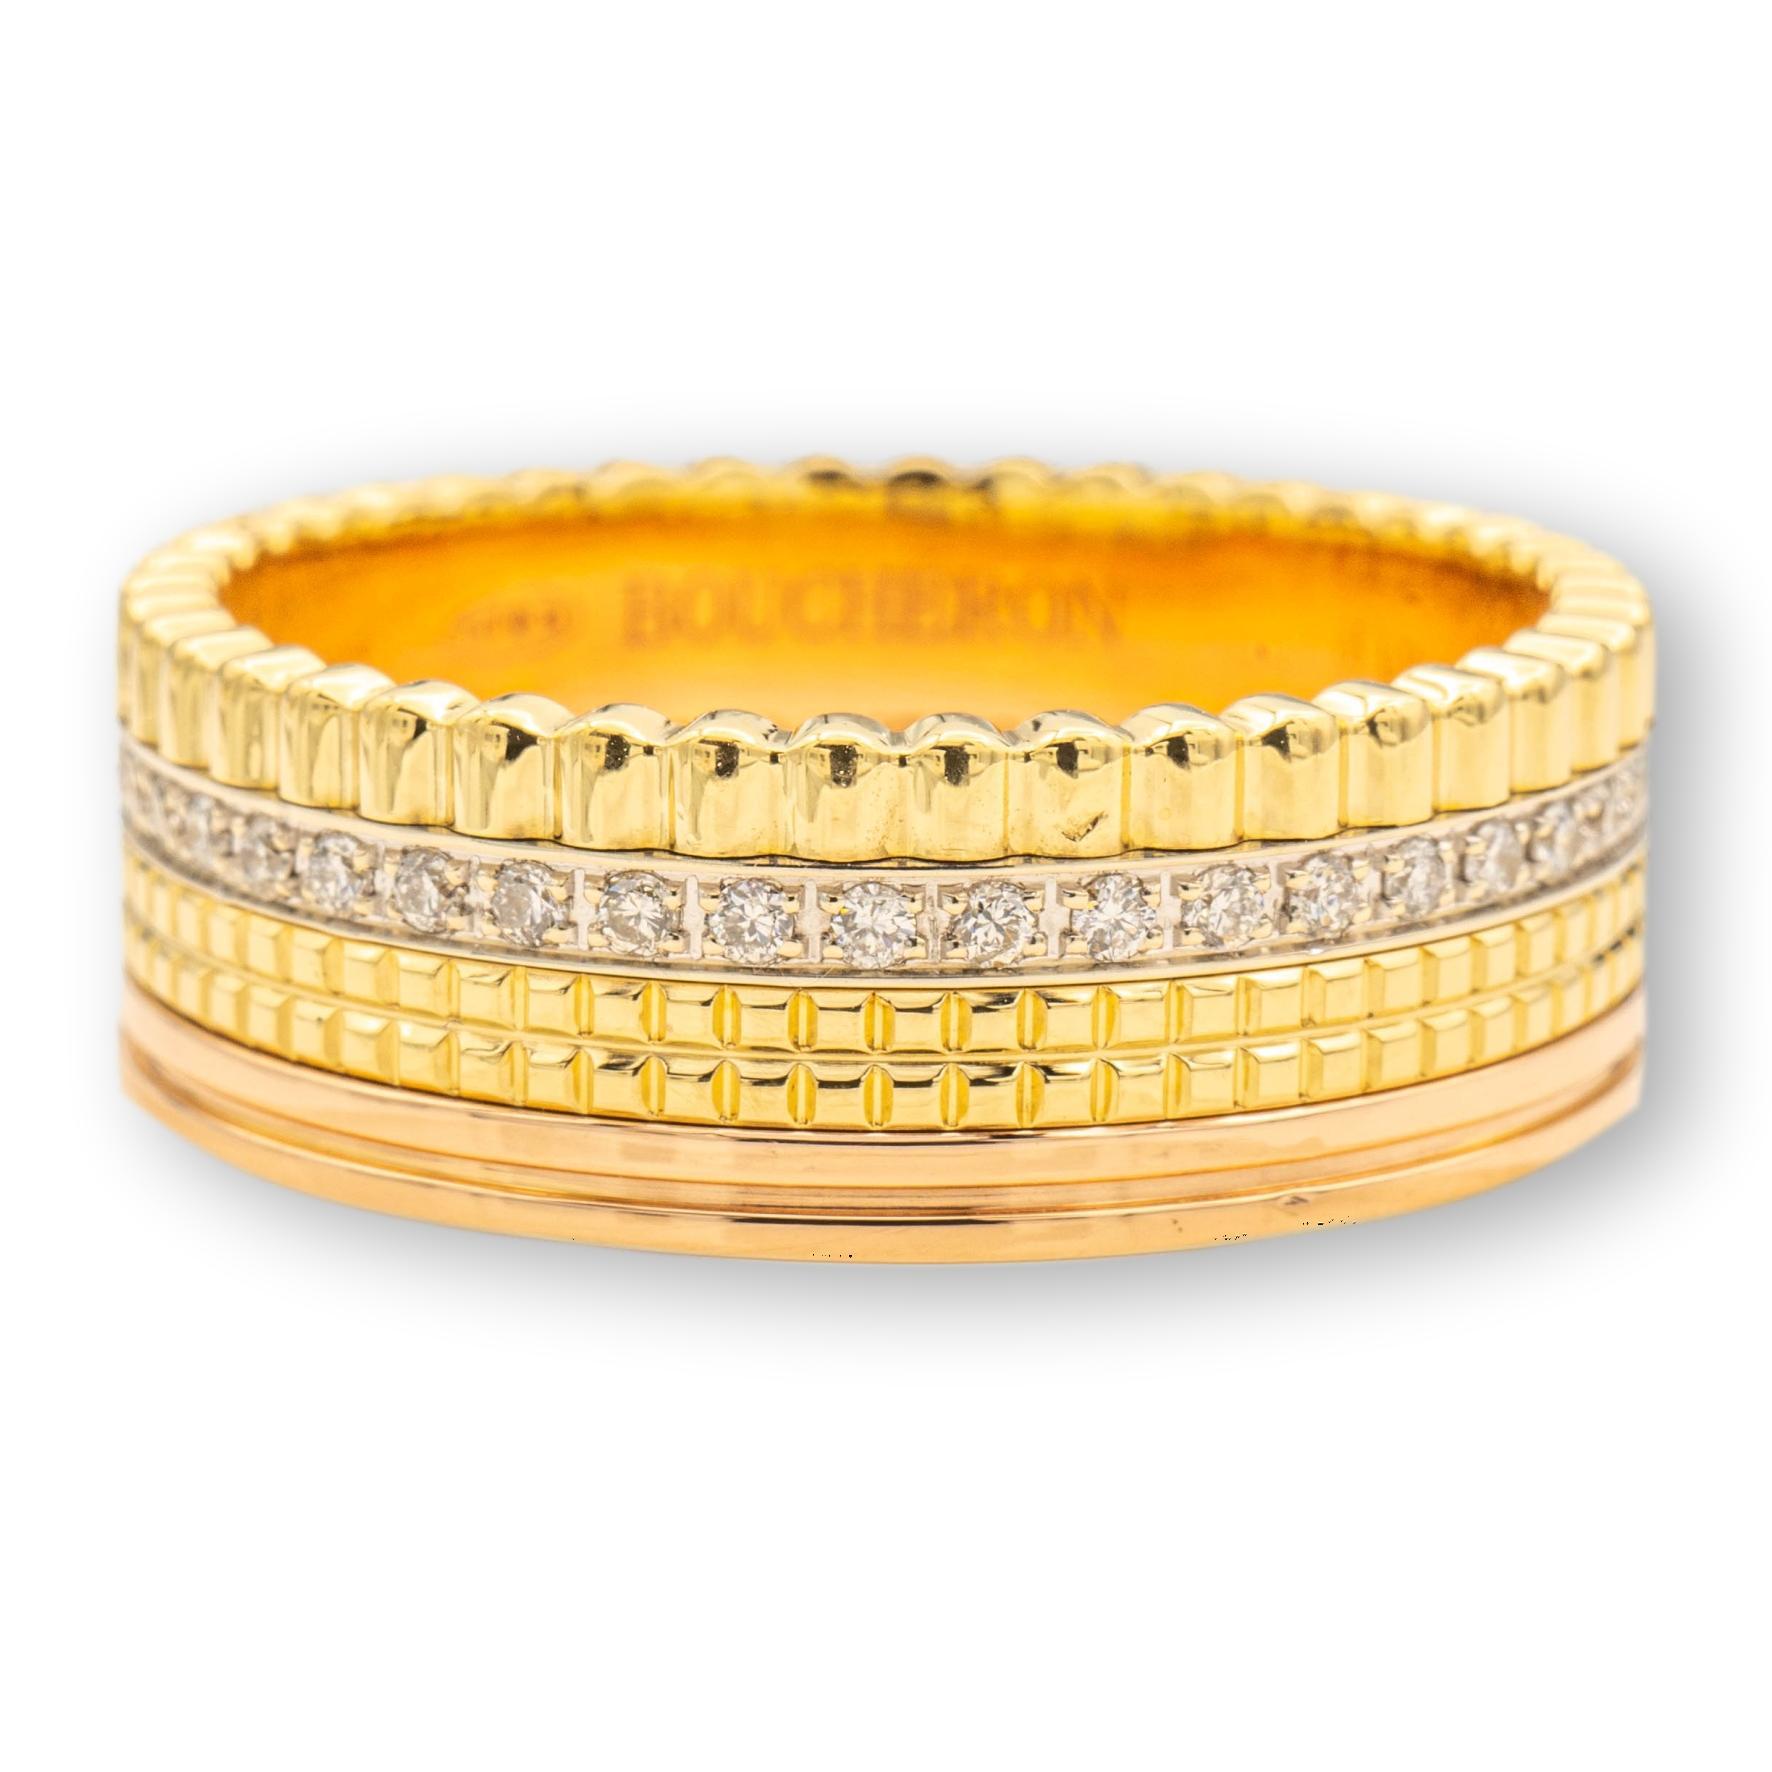 Round Cut Boucheron Quatre Classique 18K Pink, Yellow and White Gold Diamond Band Ring Siz